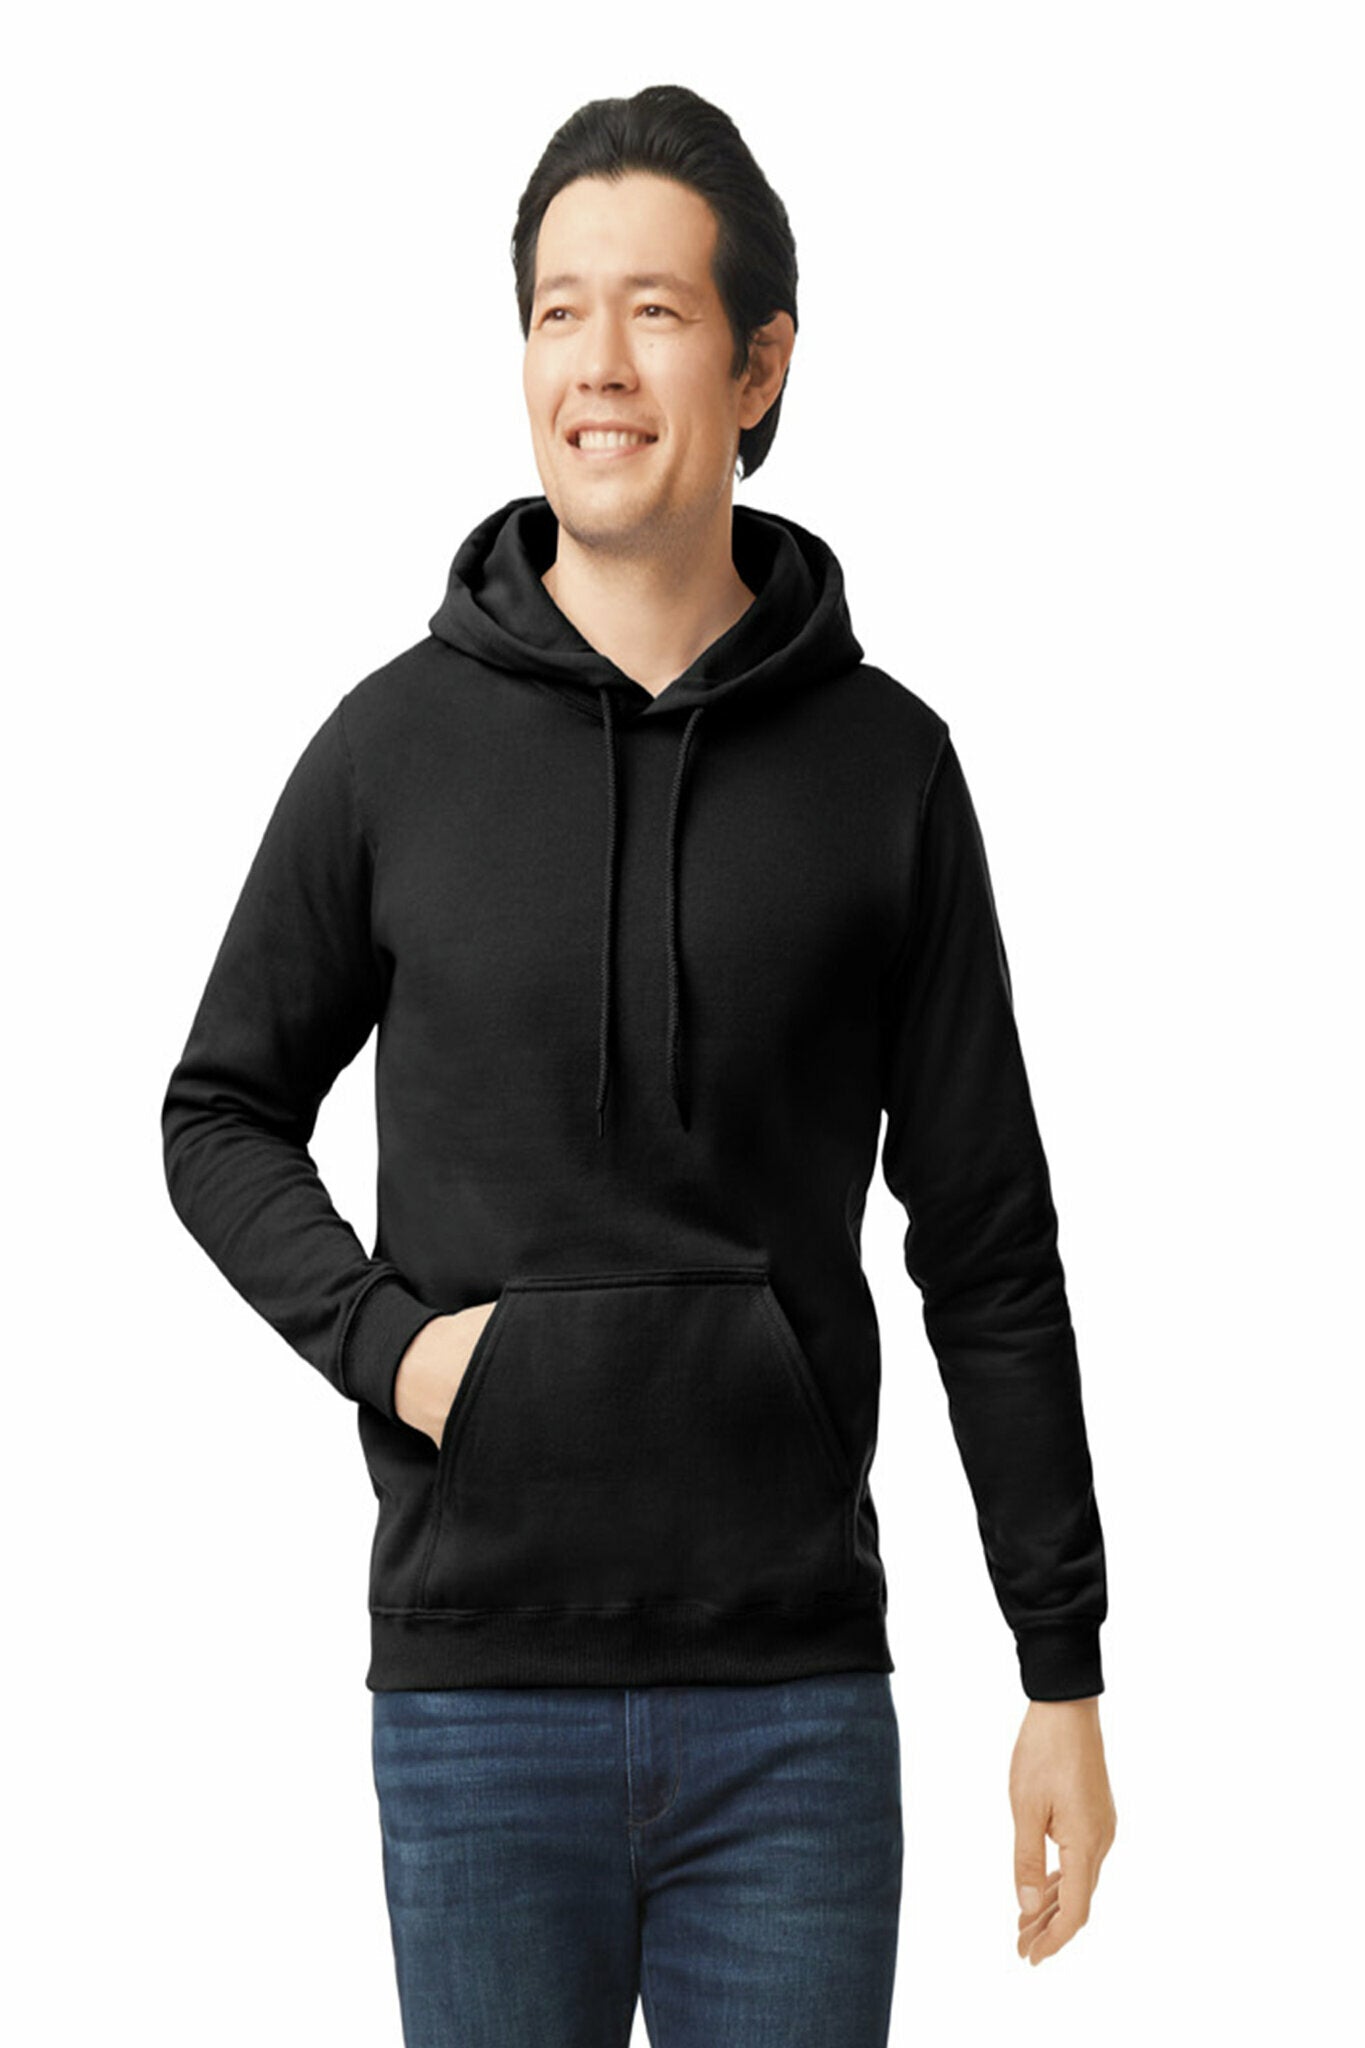 Gildan Heavy Blend Adult Hooded Sweatshirt Black